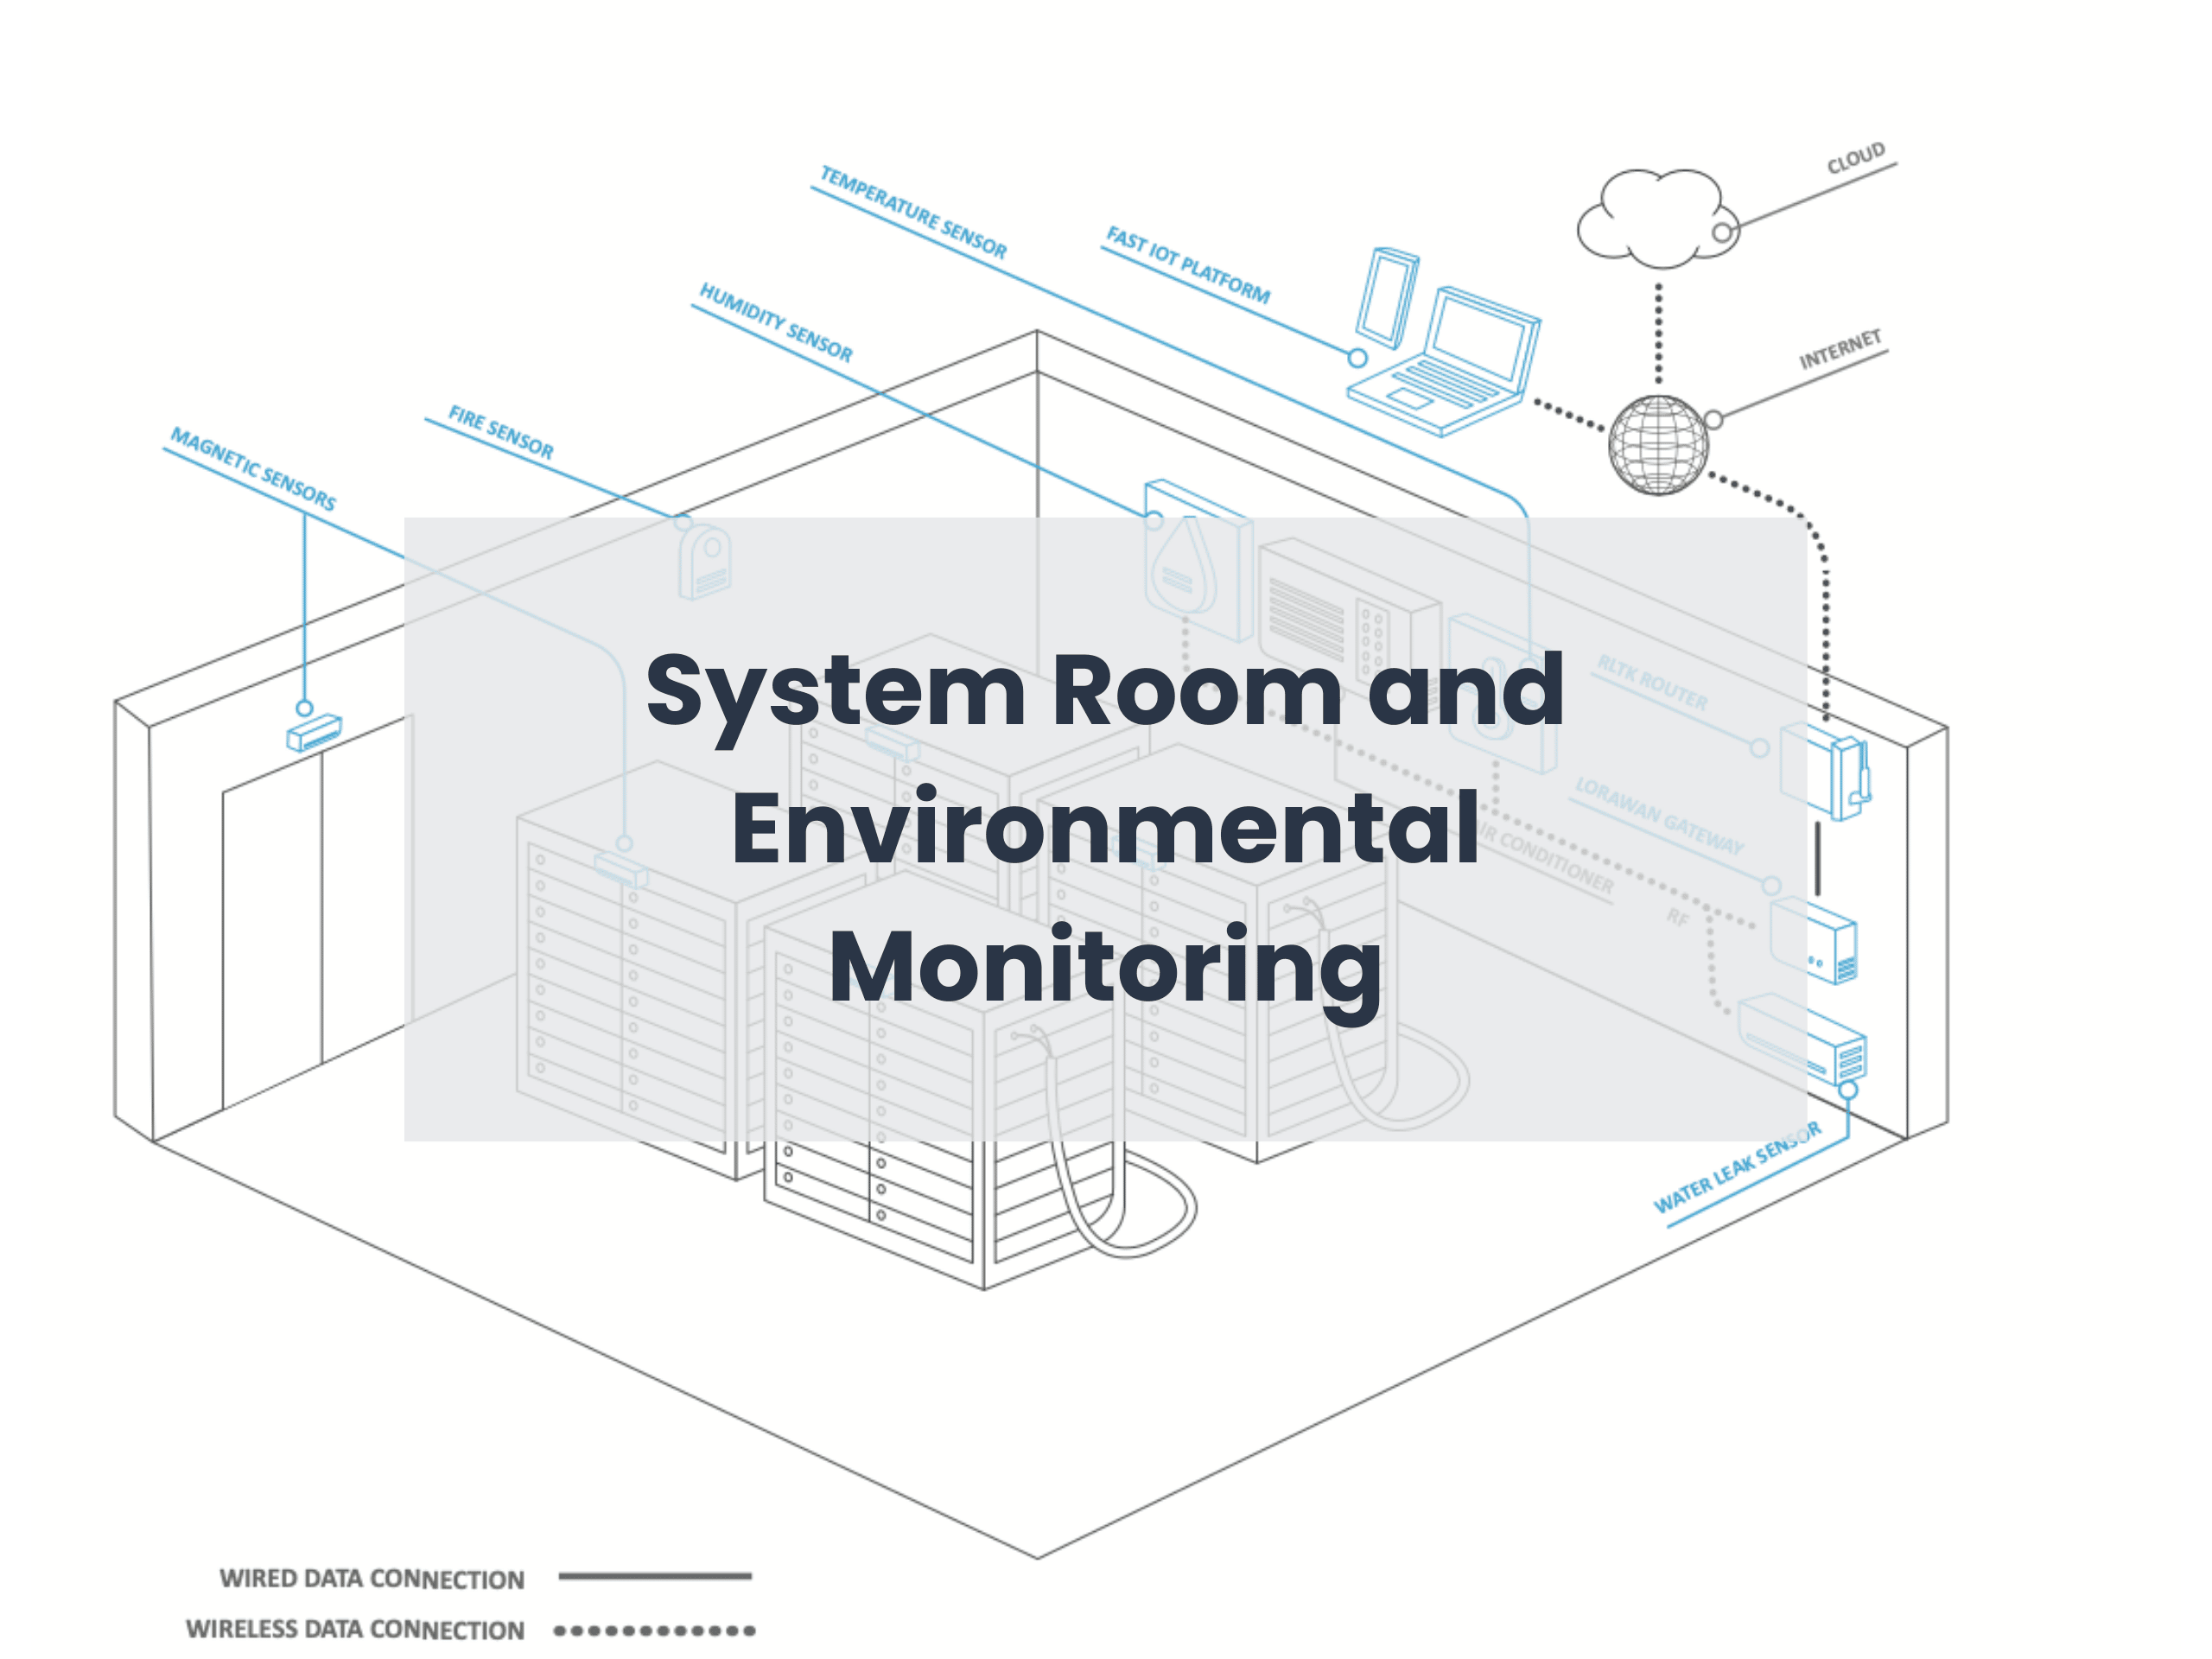 System Room and Environmental Monitoring